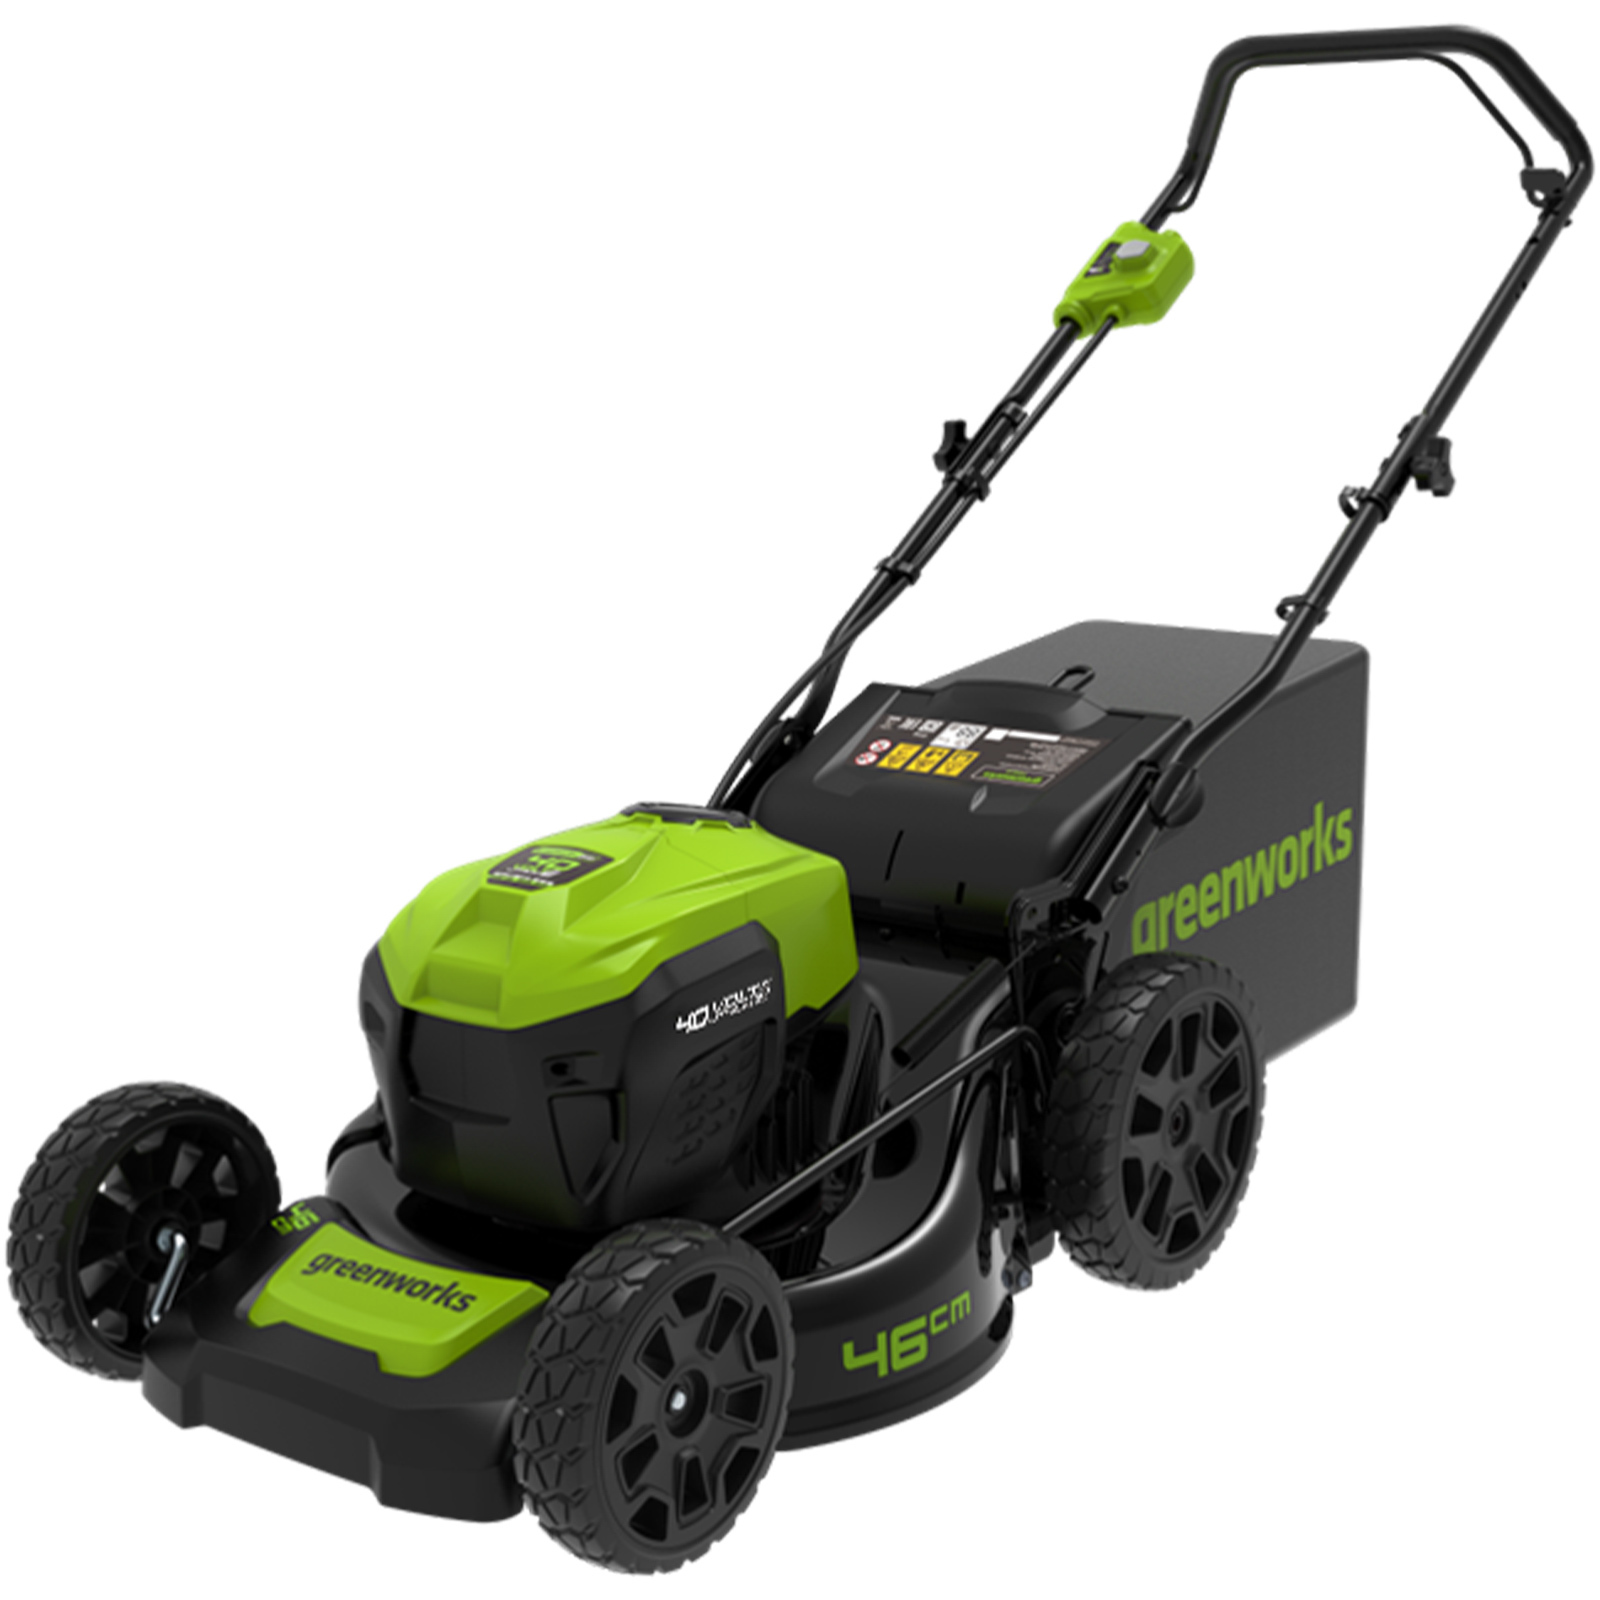 
Greenworks 15 Inch Electric 40v Lawn Mower